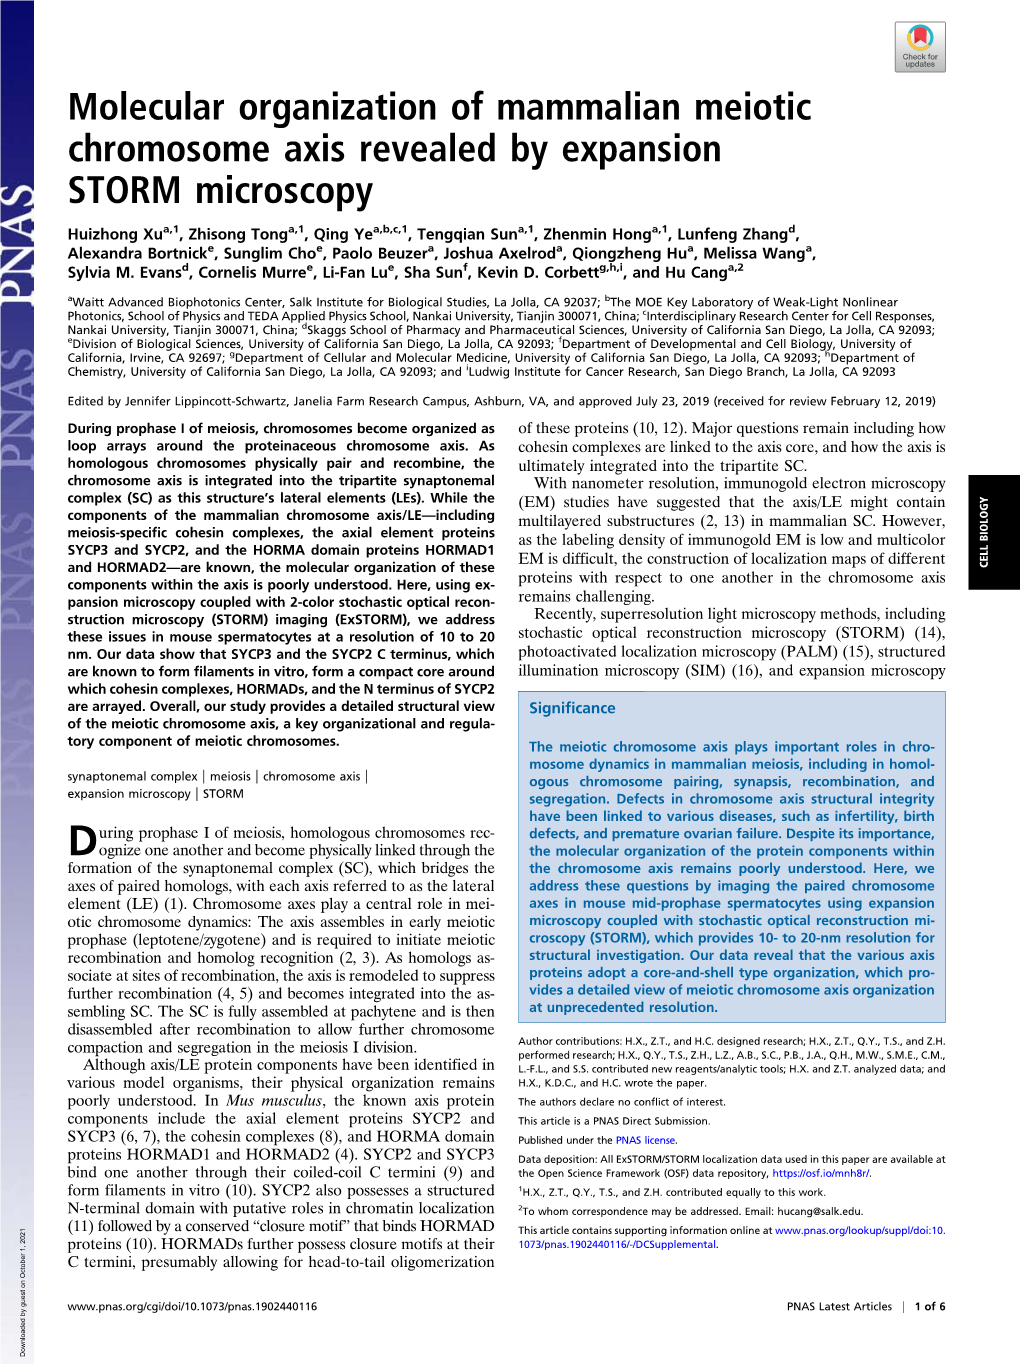 Molecular Organization of Mammalian Meiotic Chromosome Axis Revealed by Expansion STORM Microscopy